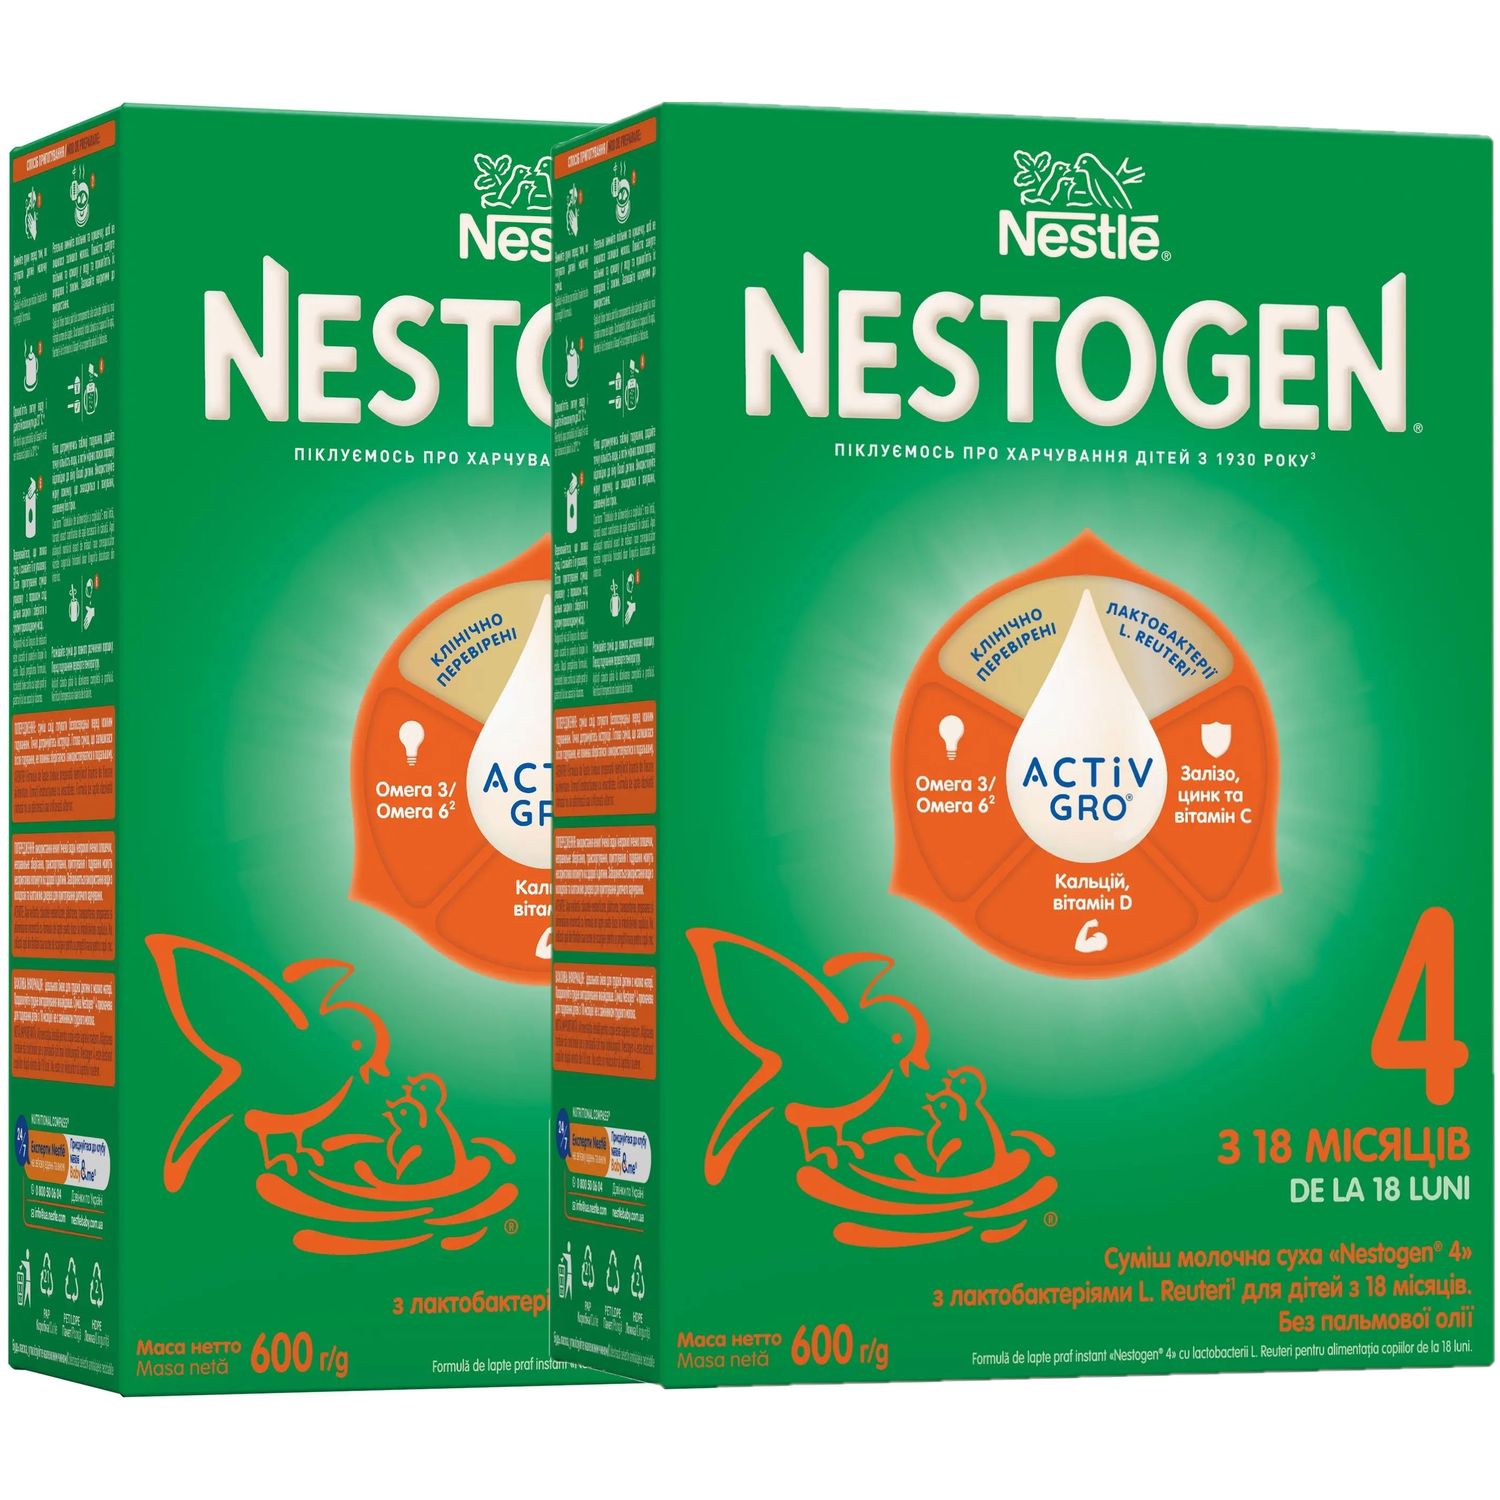 Суха молочна суміш Nestogen 4 з лактобактеріями L. Reuteri 1.2 кг (2 шт. по 600 г) - фото 1